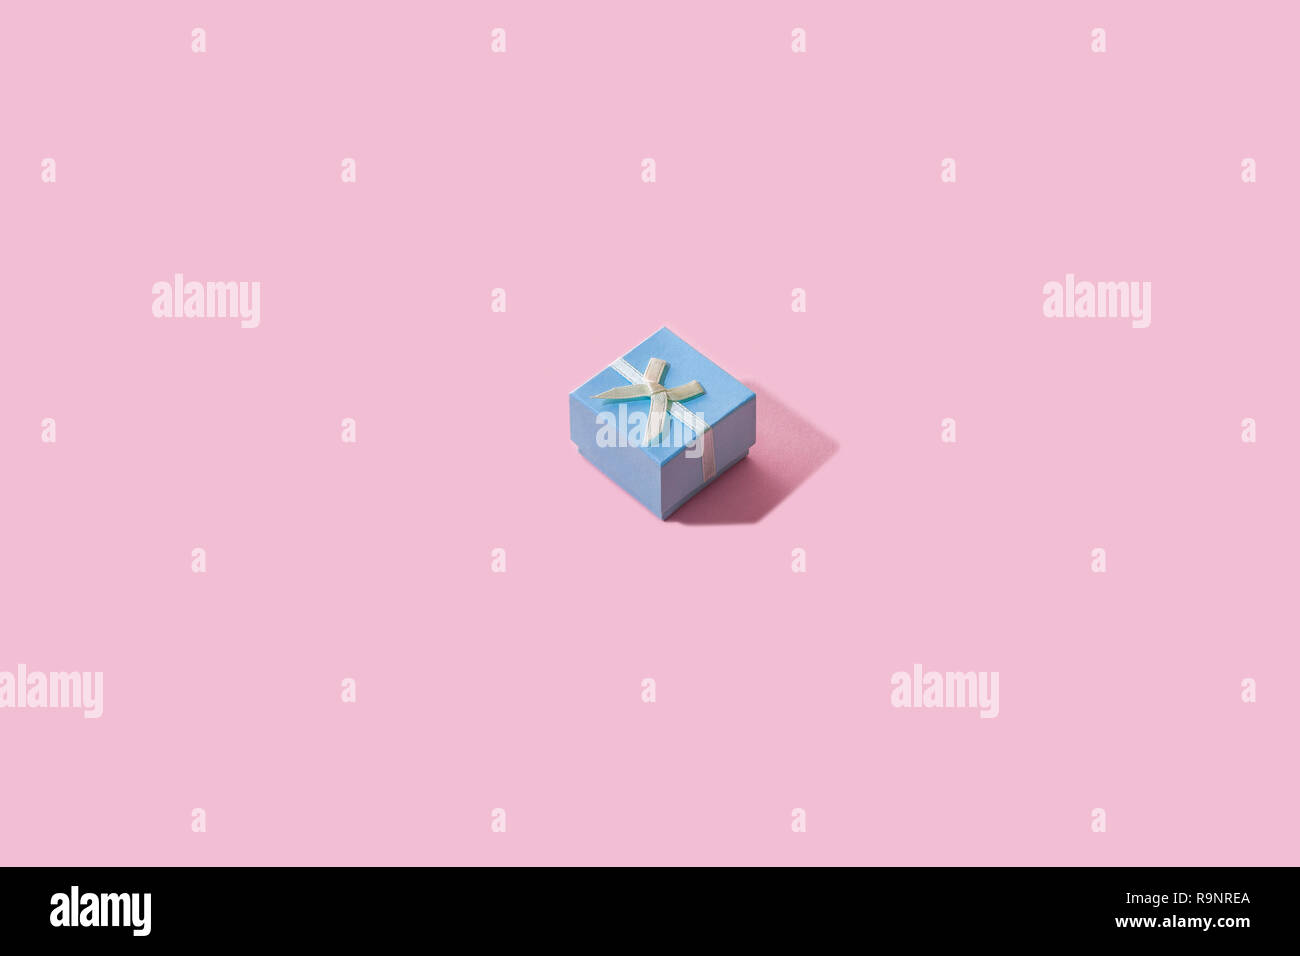 Blue Gift Box. Pink background. Stock Photo